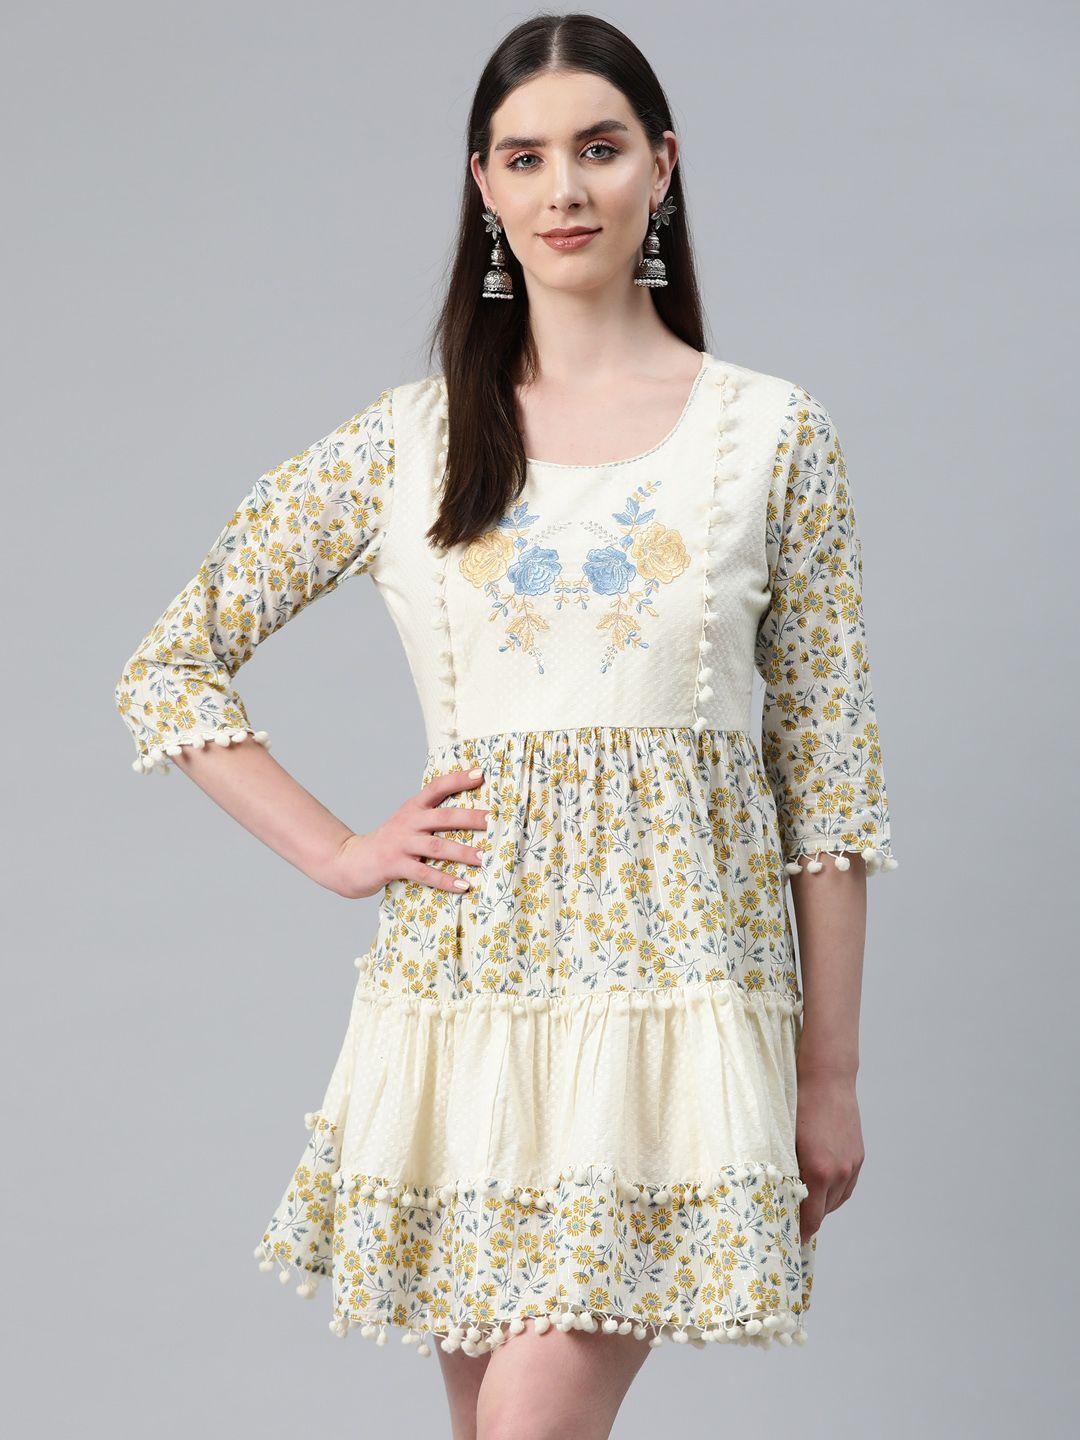 readiprint-fashions-floral-print-with-pom-pom-detail-a-line-dress